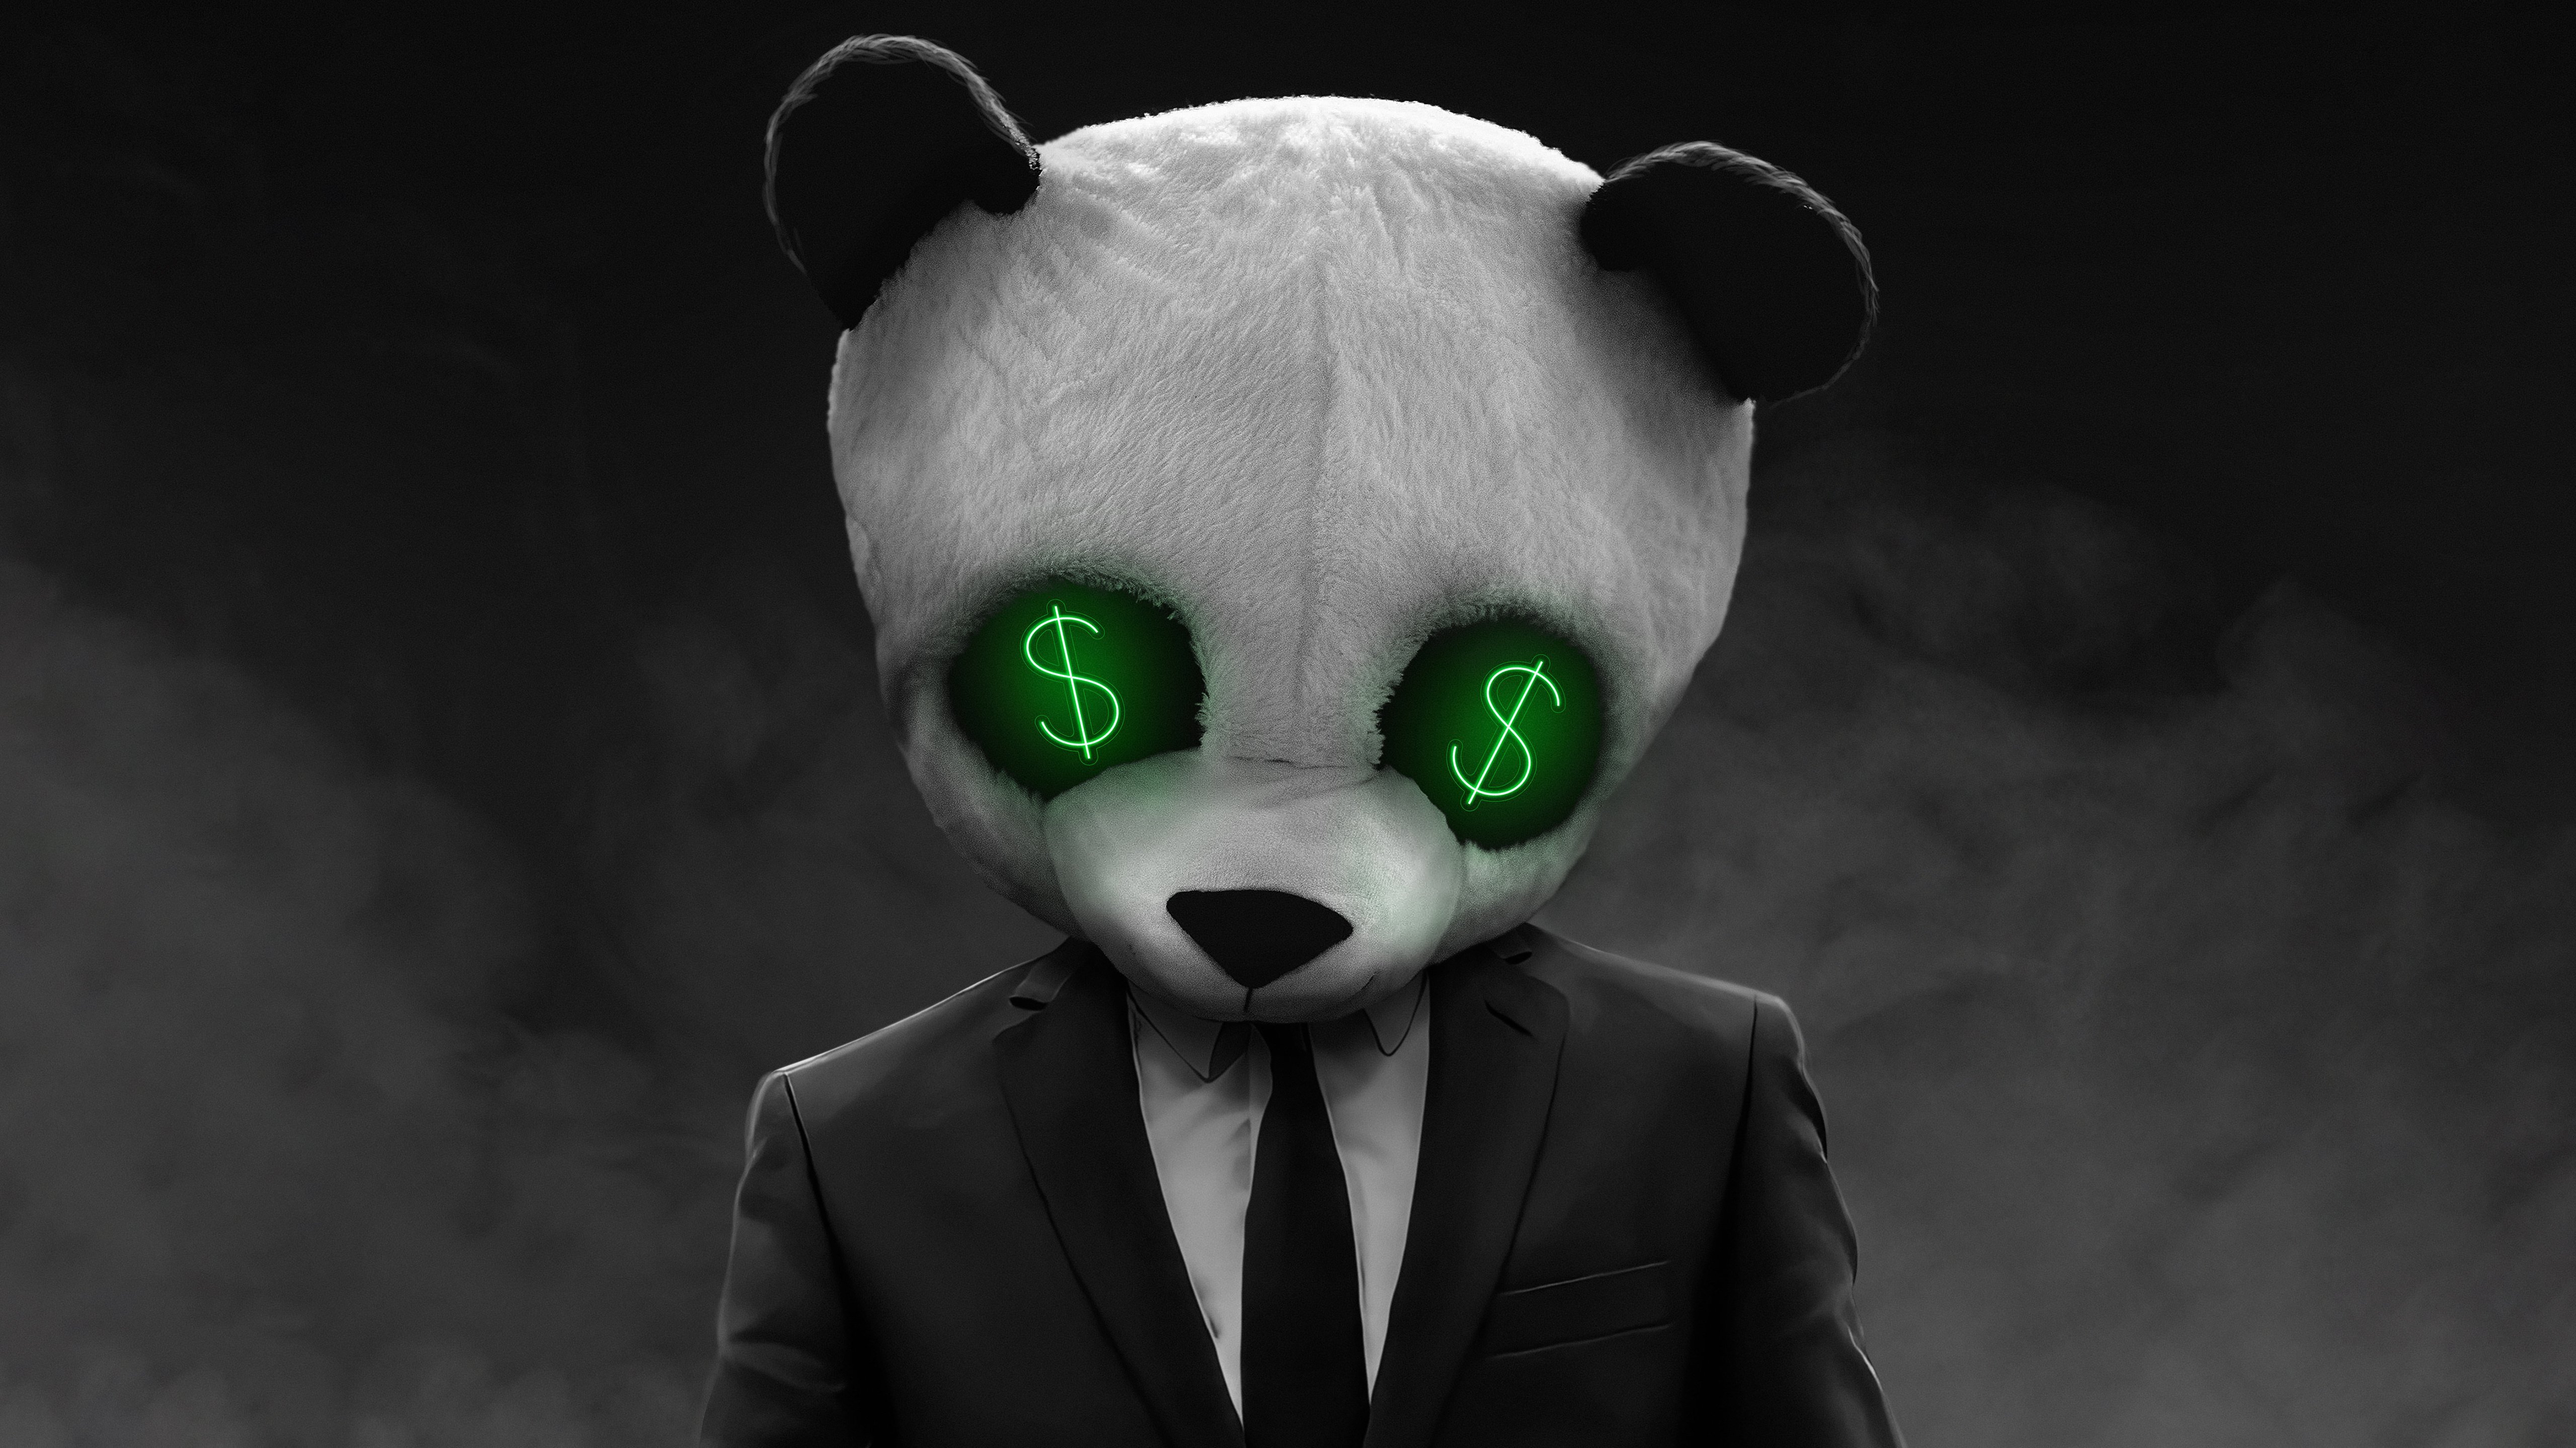 Wallpaper Panda in a suit